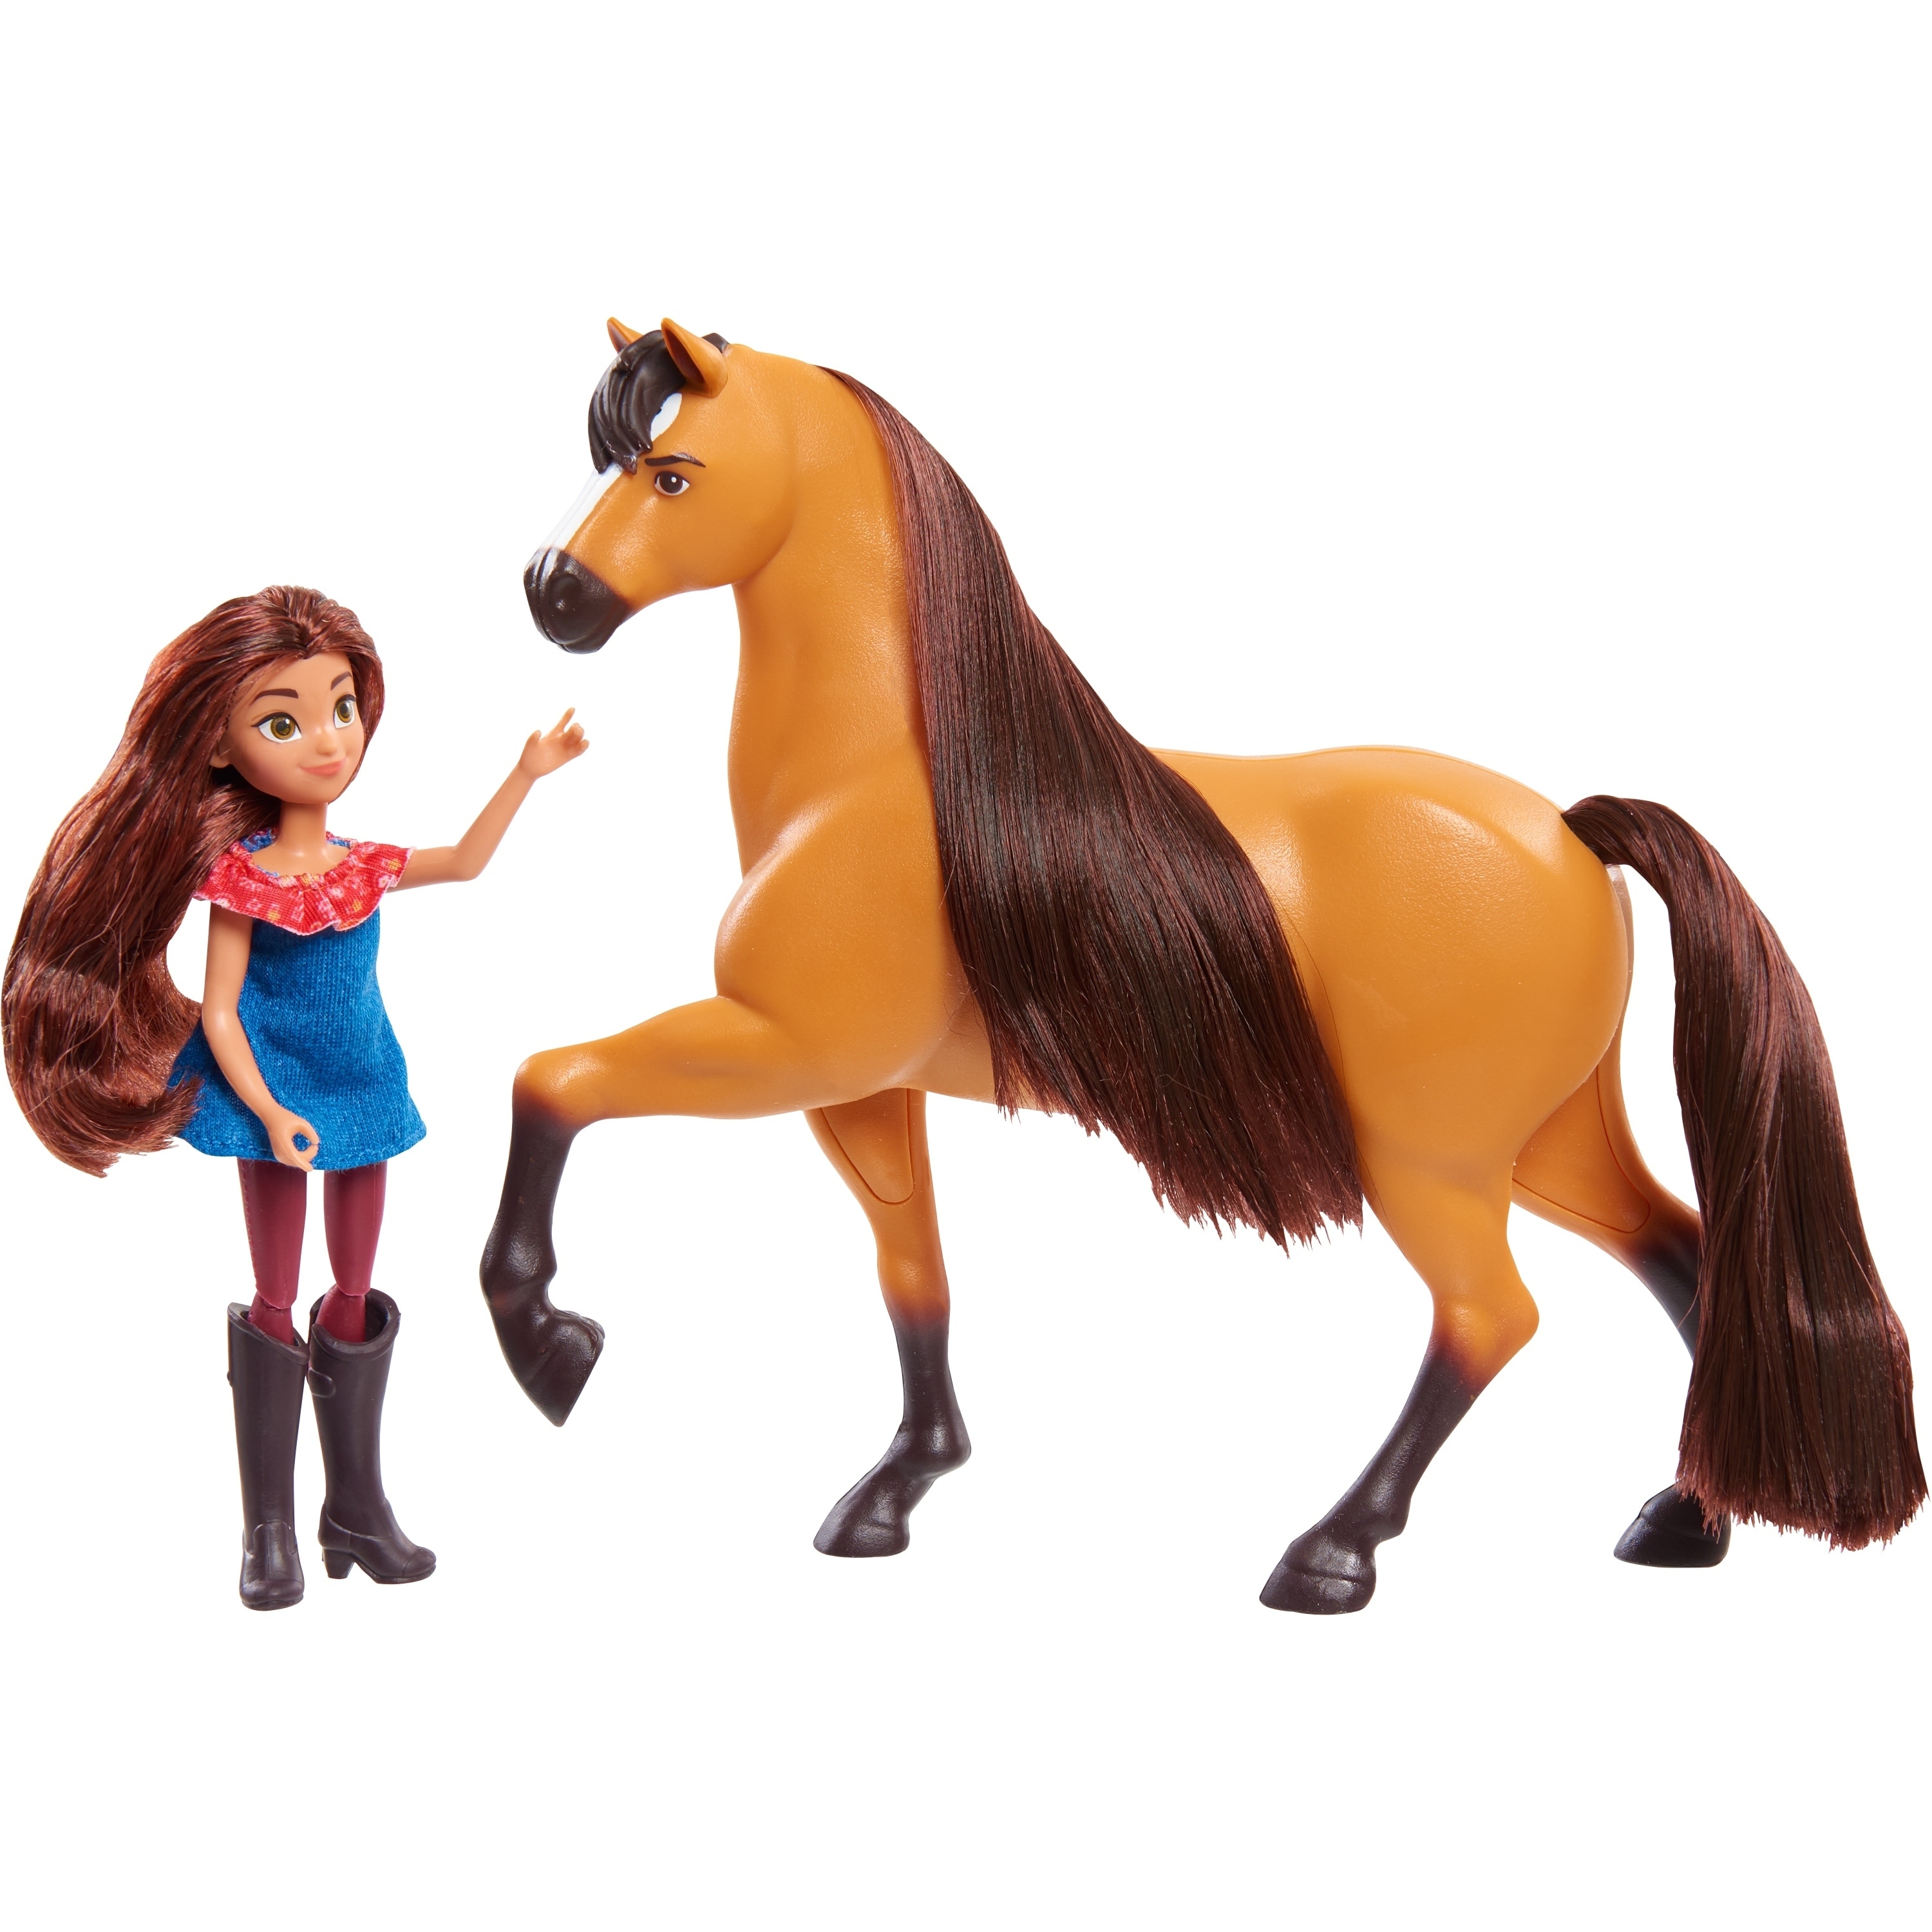 spirit riding free toy horses